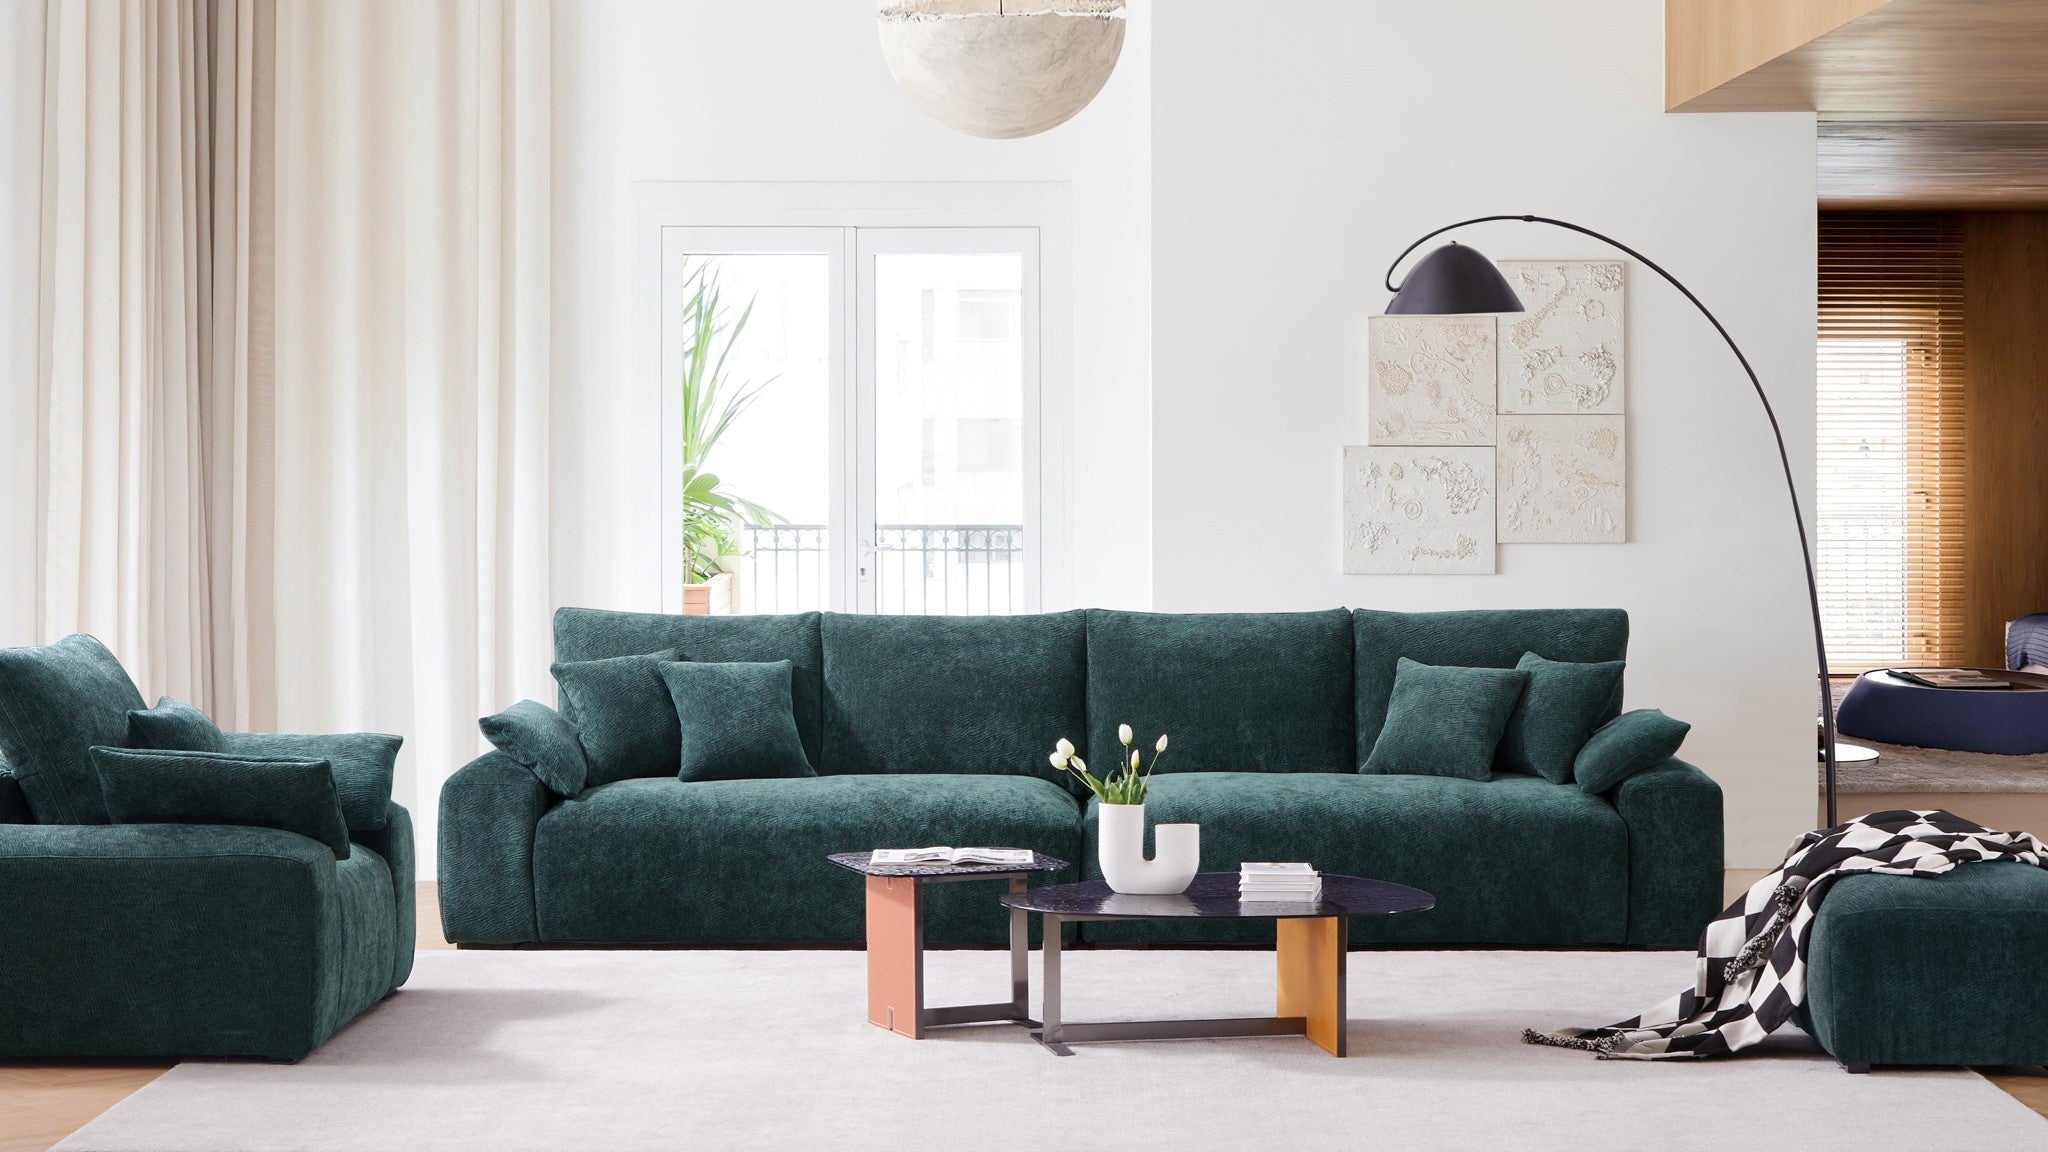 The Empress Green Sofa Set